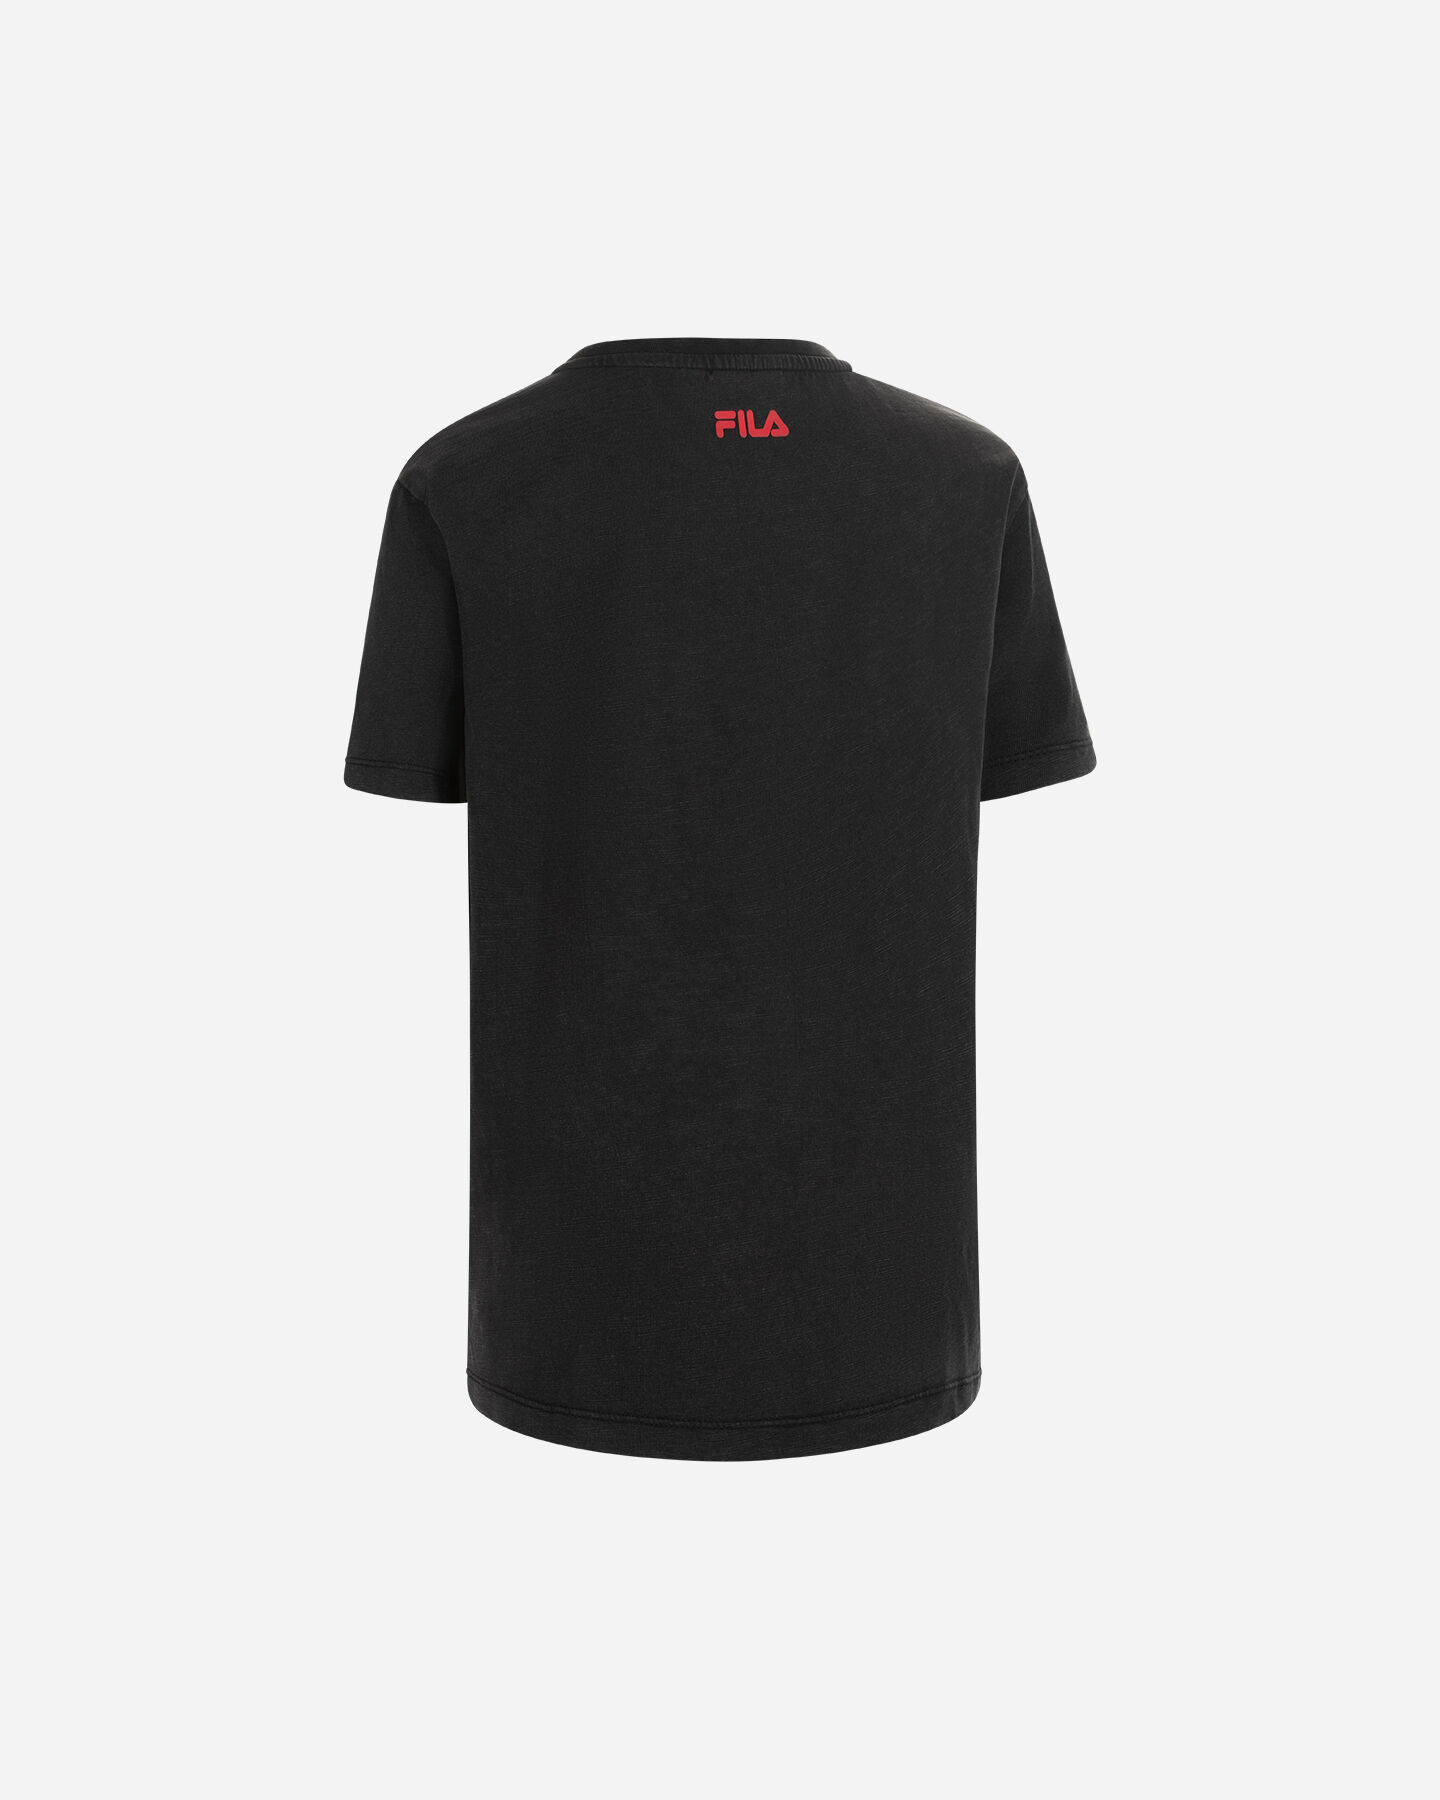  T-Shirt FILA GRAPHIC PUNK JR S4119662|050|8A scatto 1